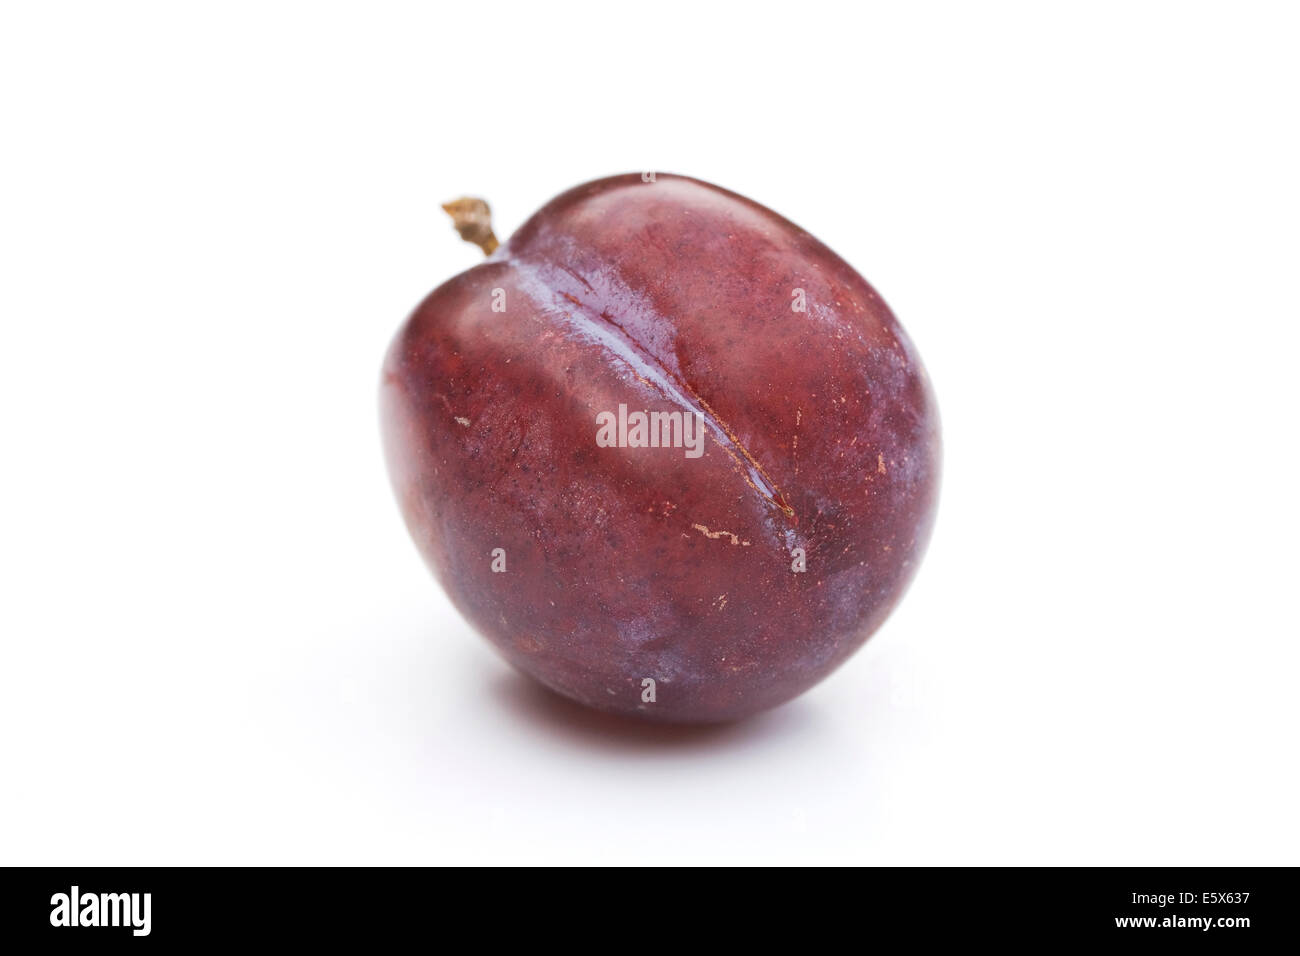 A single plum on a white background. Stock Photo